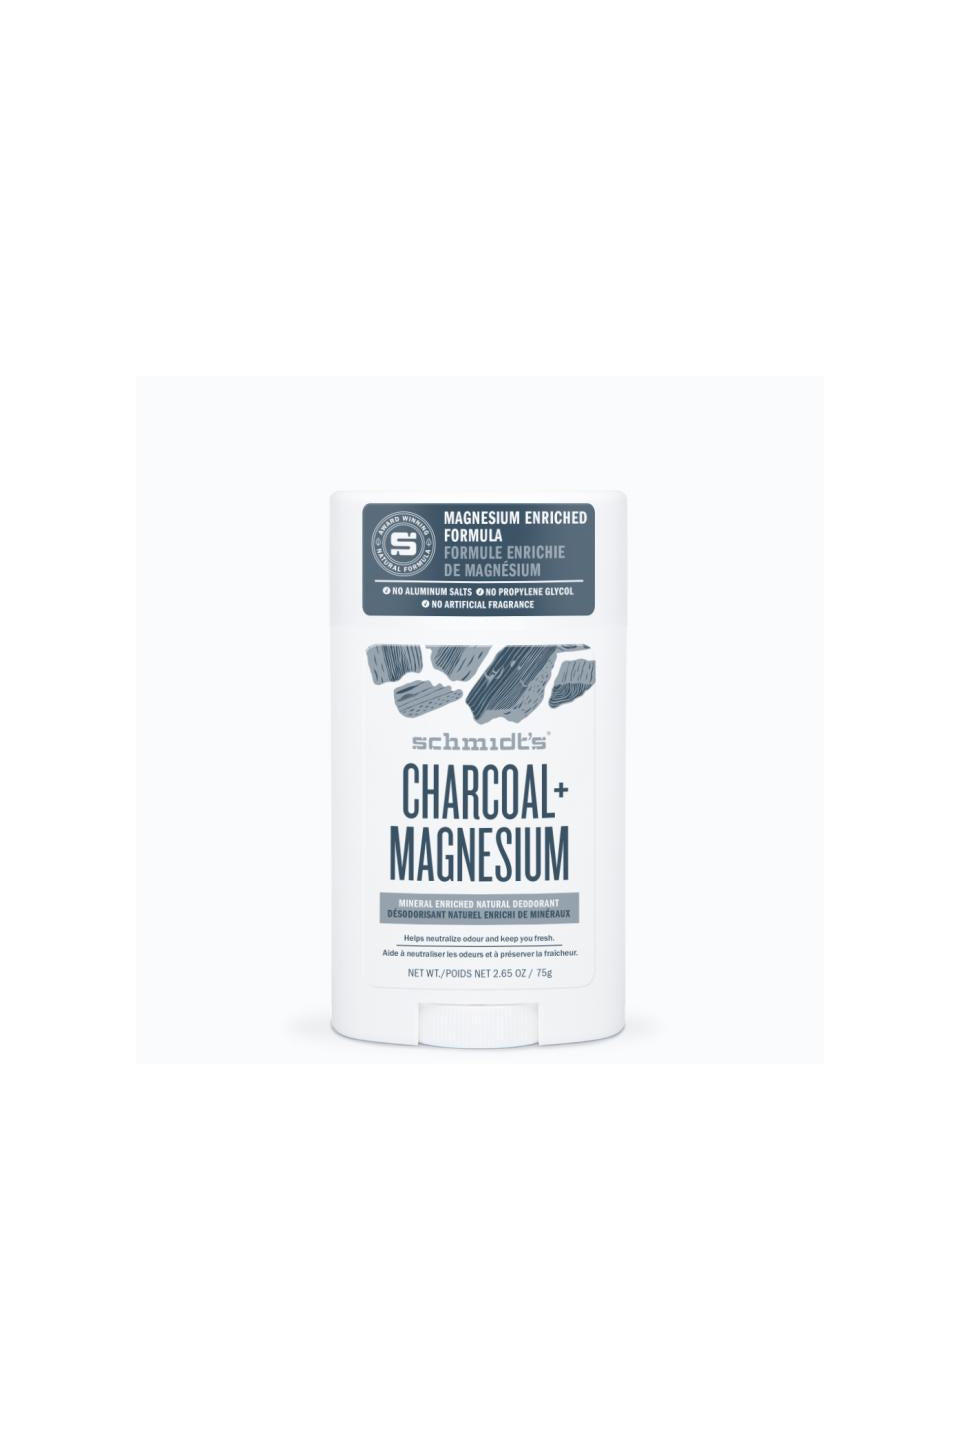 Schmidt's Charcoal + Magnesium Deodorant Stick 3.25oz